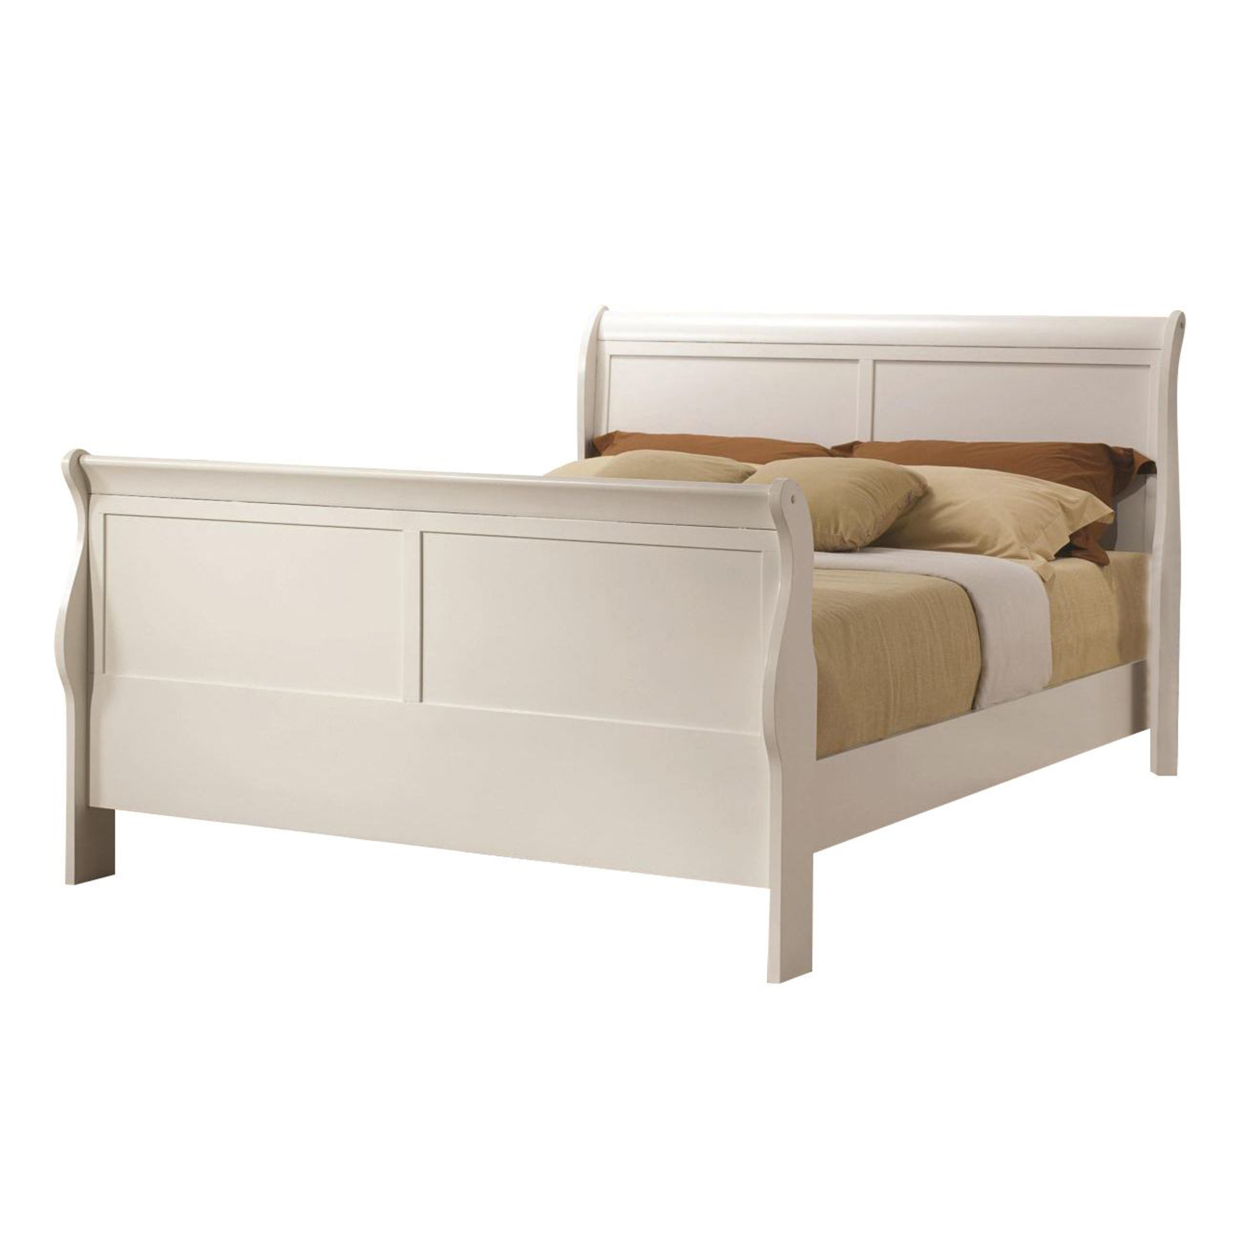 Wood Twin Size Bed, Classic Design, Sleigh Headboard And Footboard, White- Saltoro Sherpi